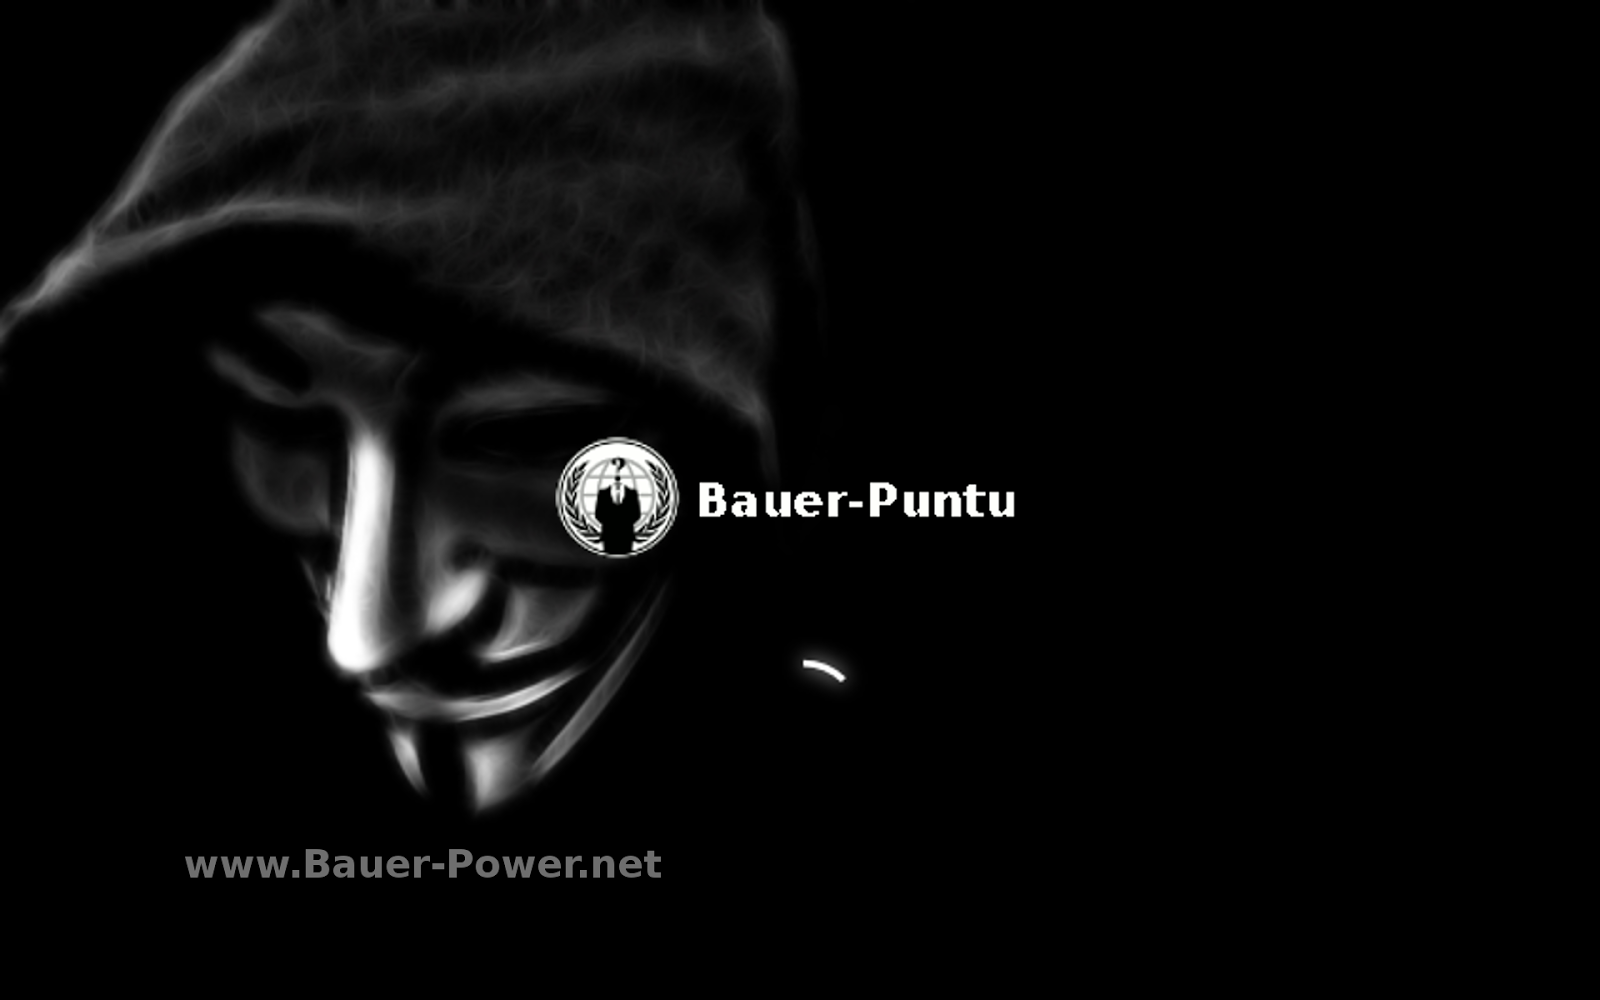 Bauer-Puntu Linux